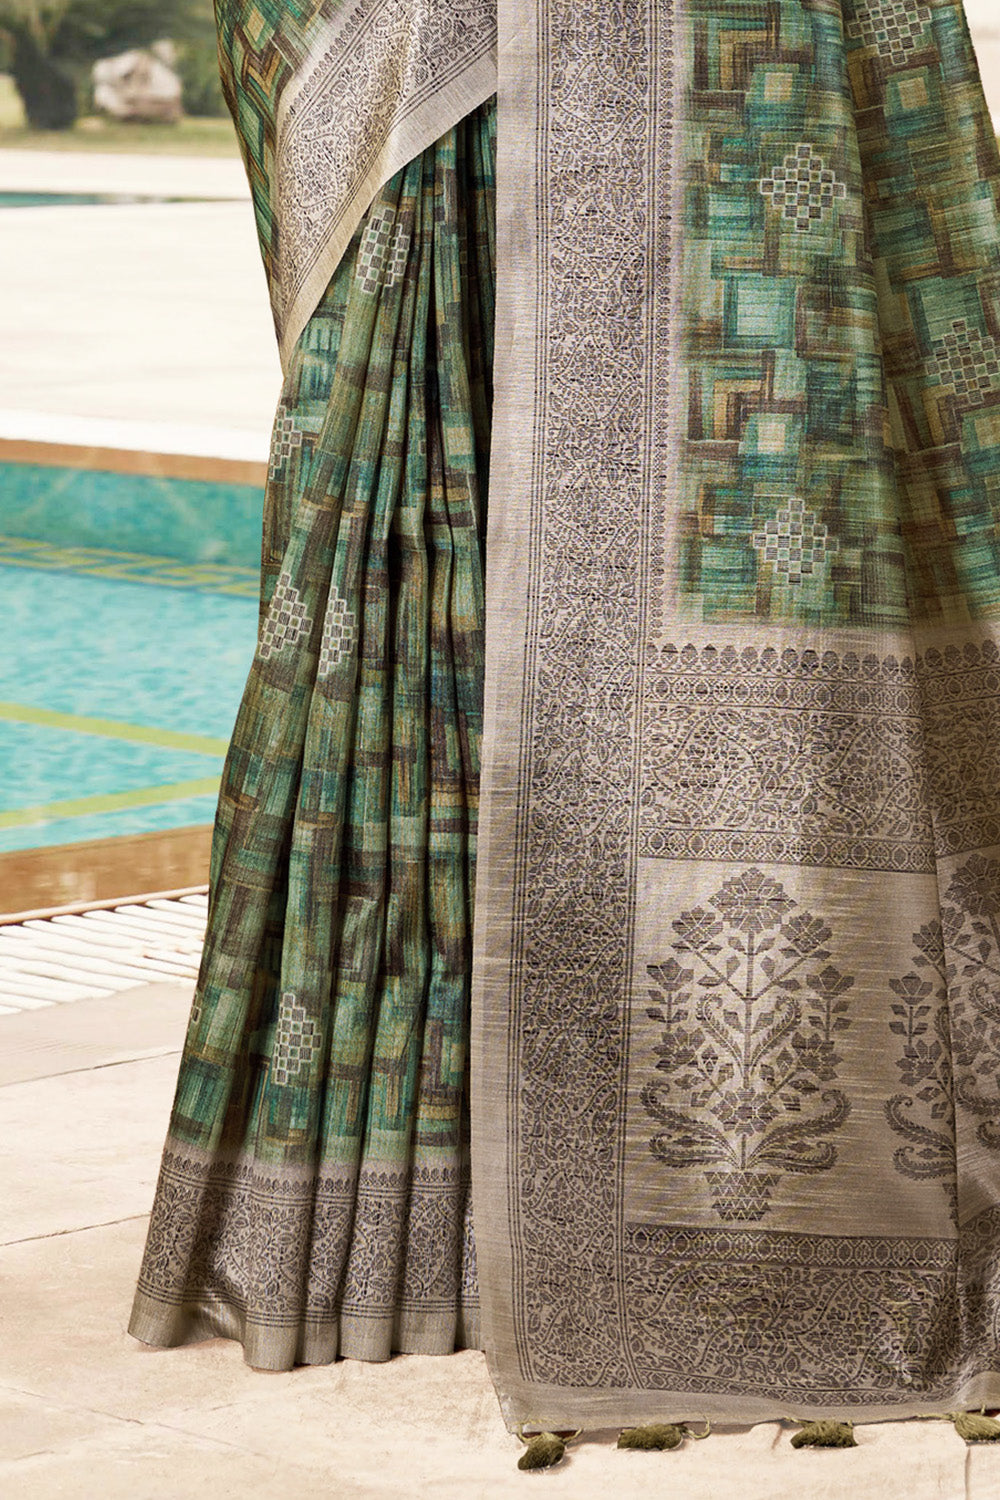 Beige & Green Color Cotton Silk Printed Saree